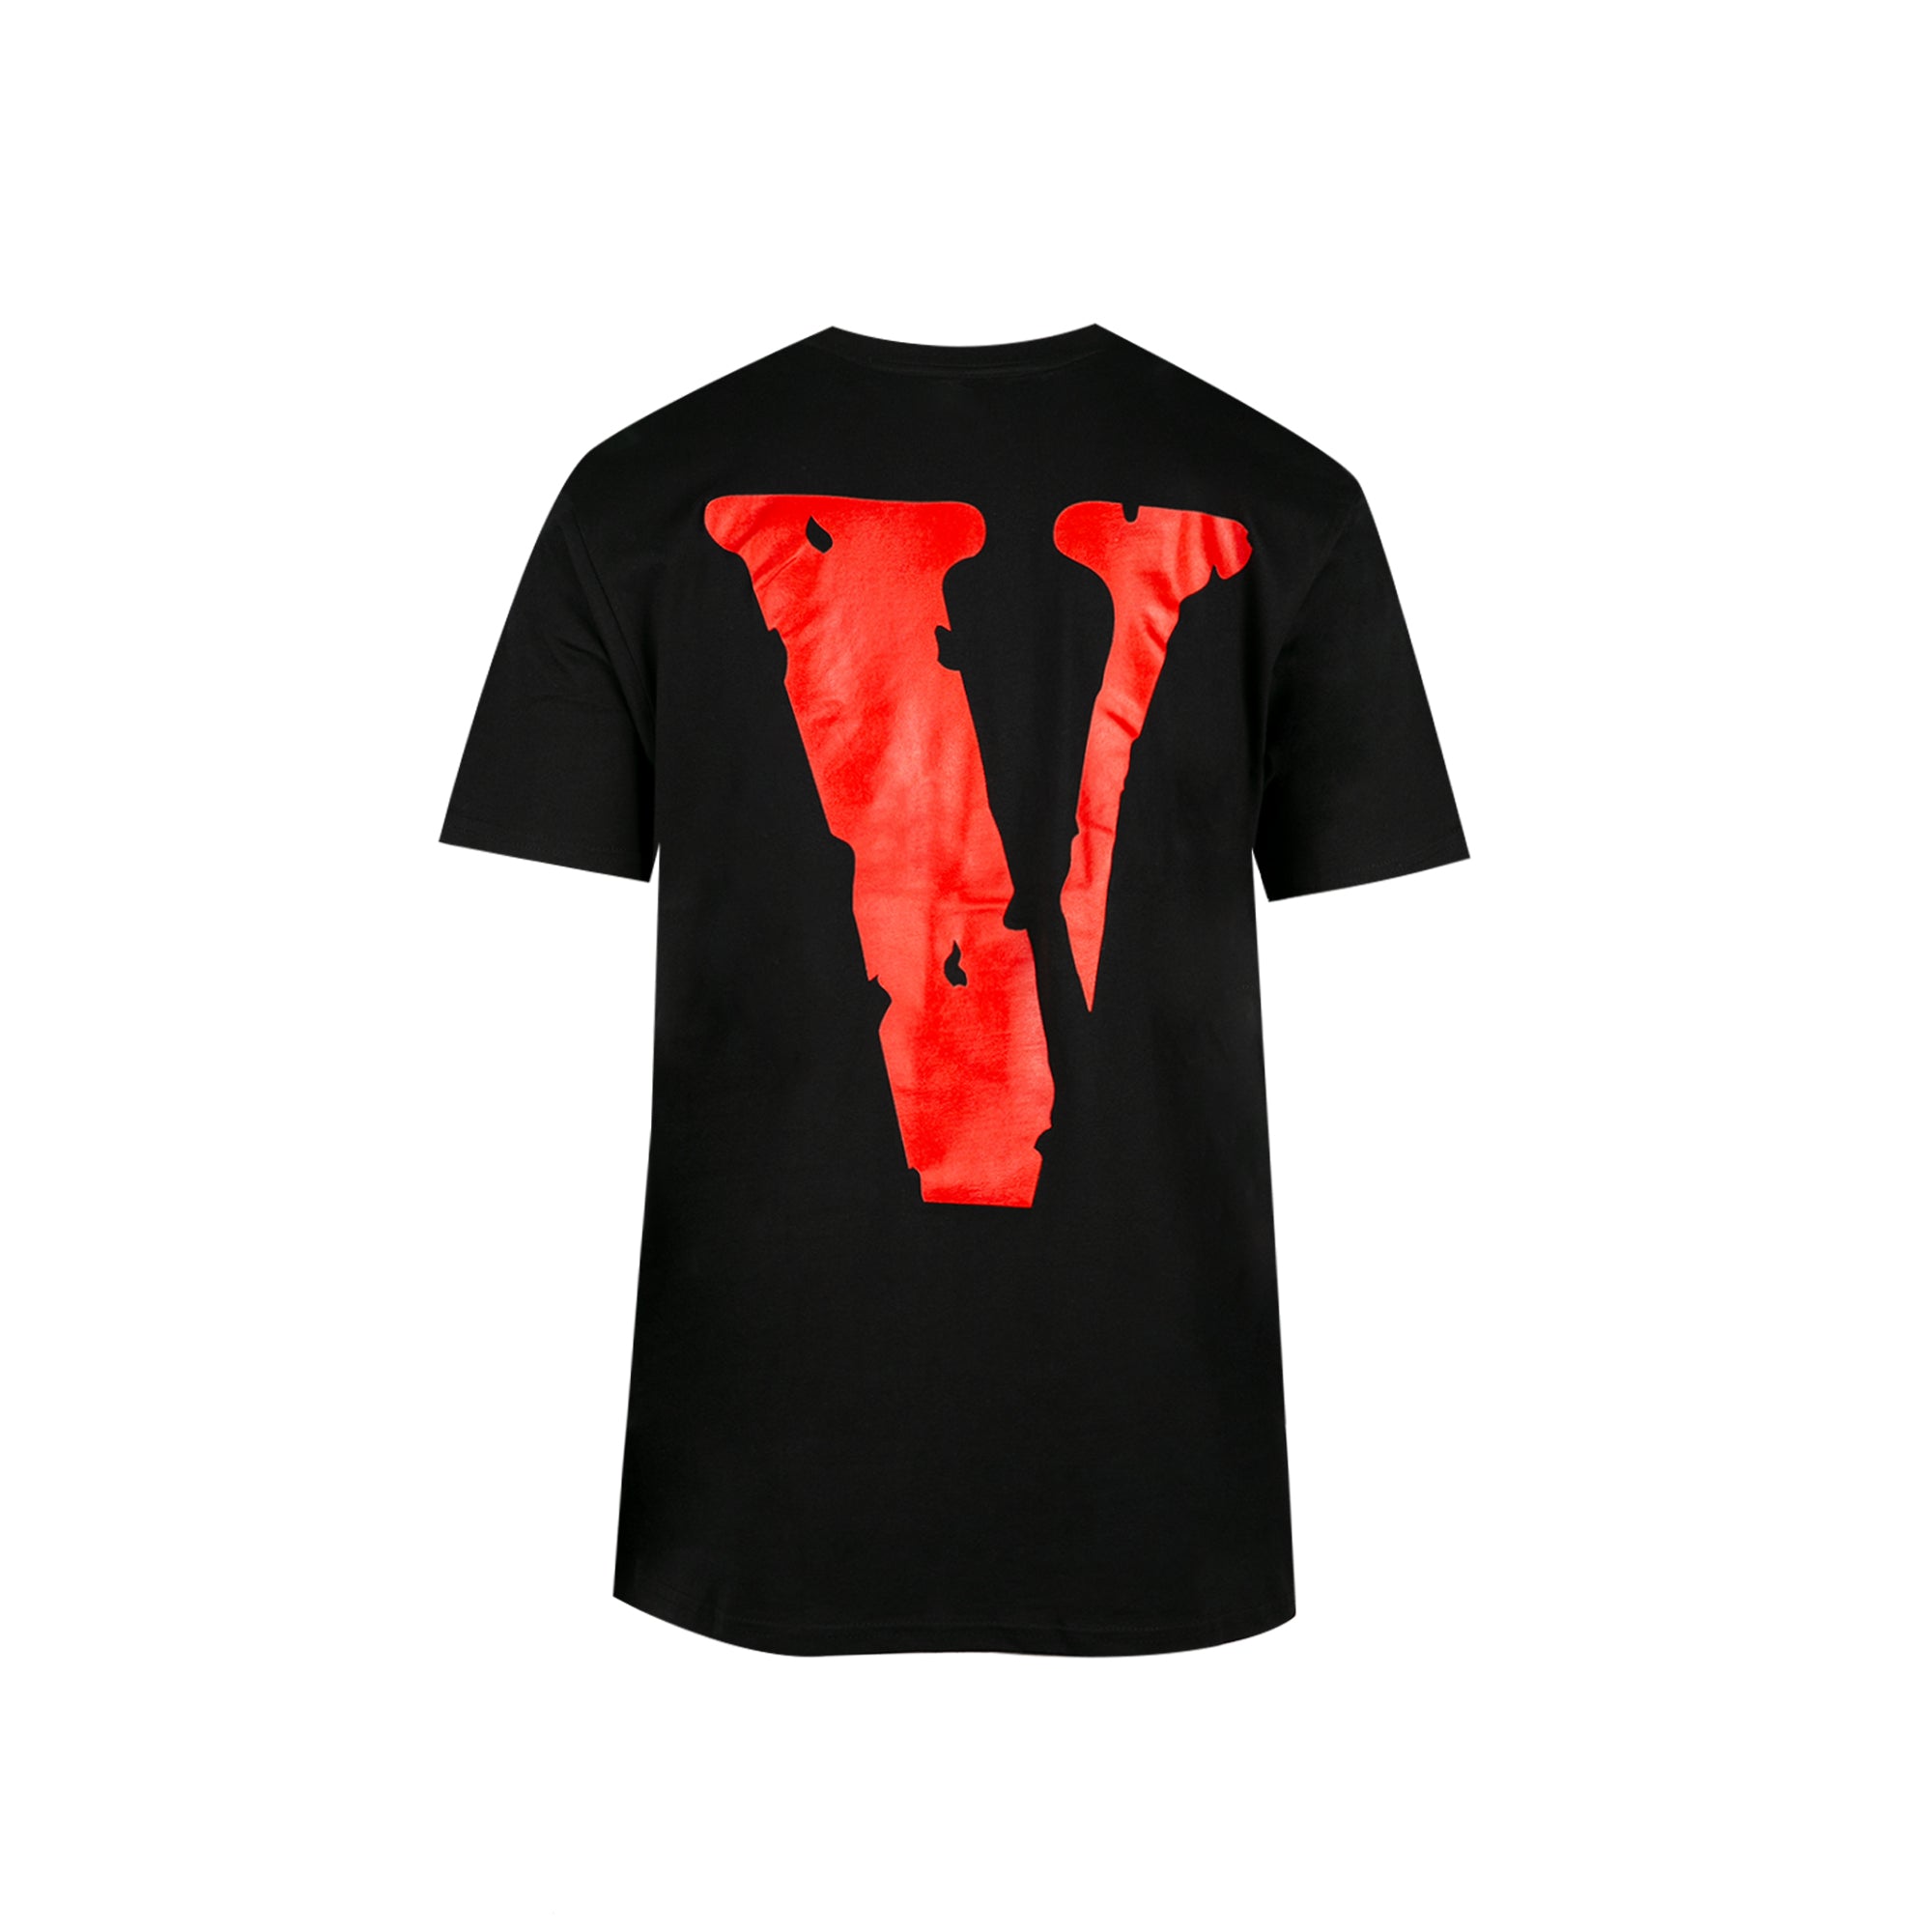 Vlone Friends Cotton Black/ Red T-Shirt